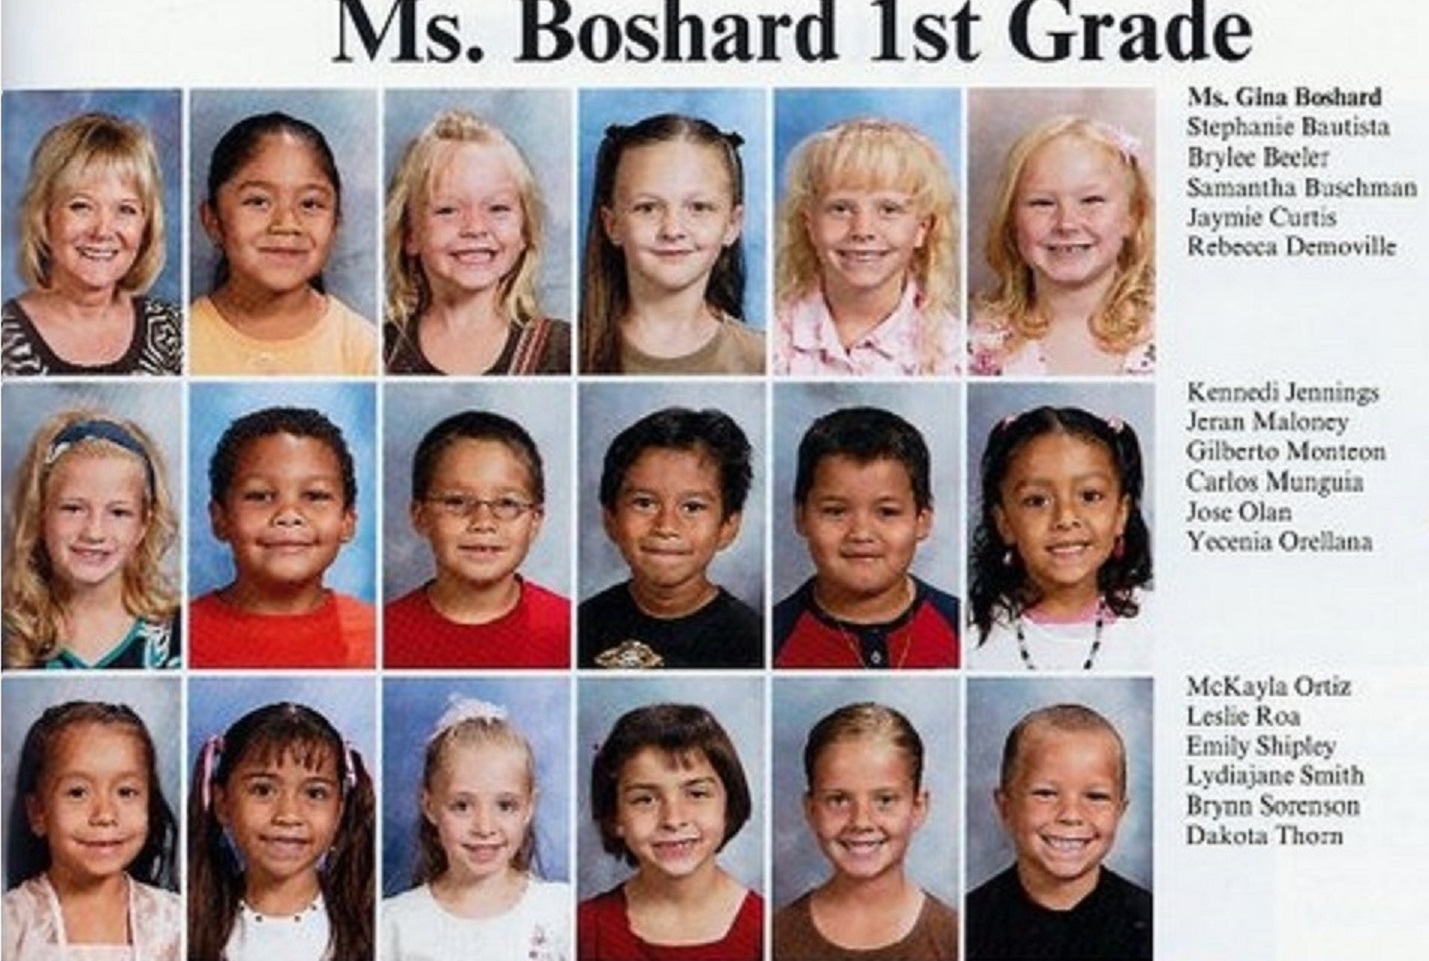 Ms. Gina Boshard's 2008-2009 first grade class at East Elementary School